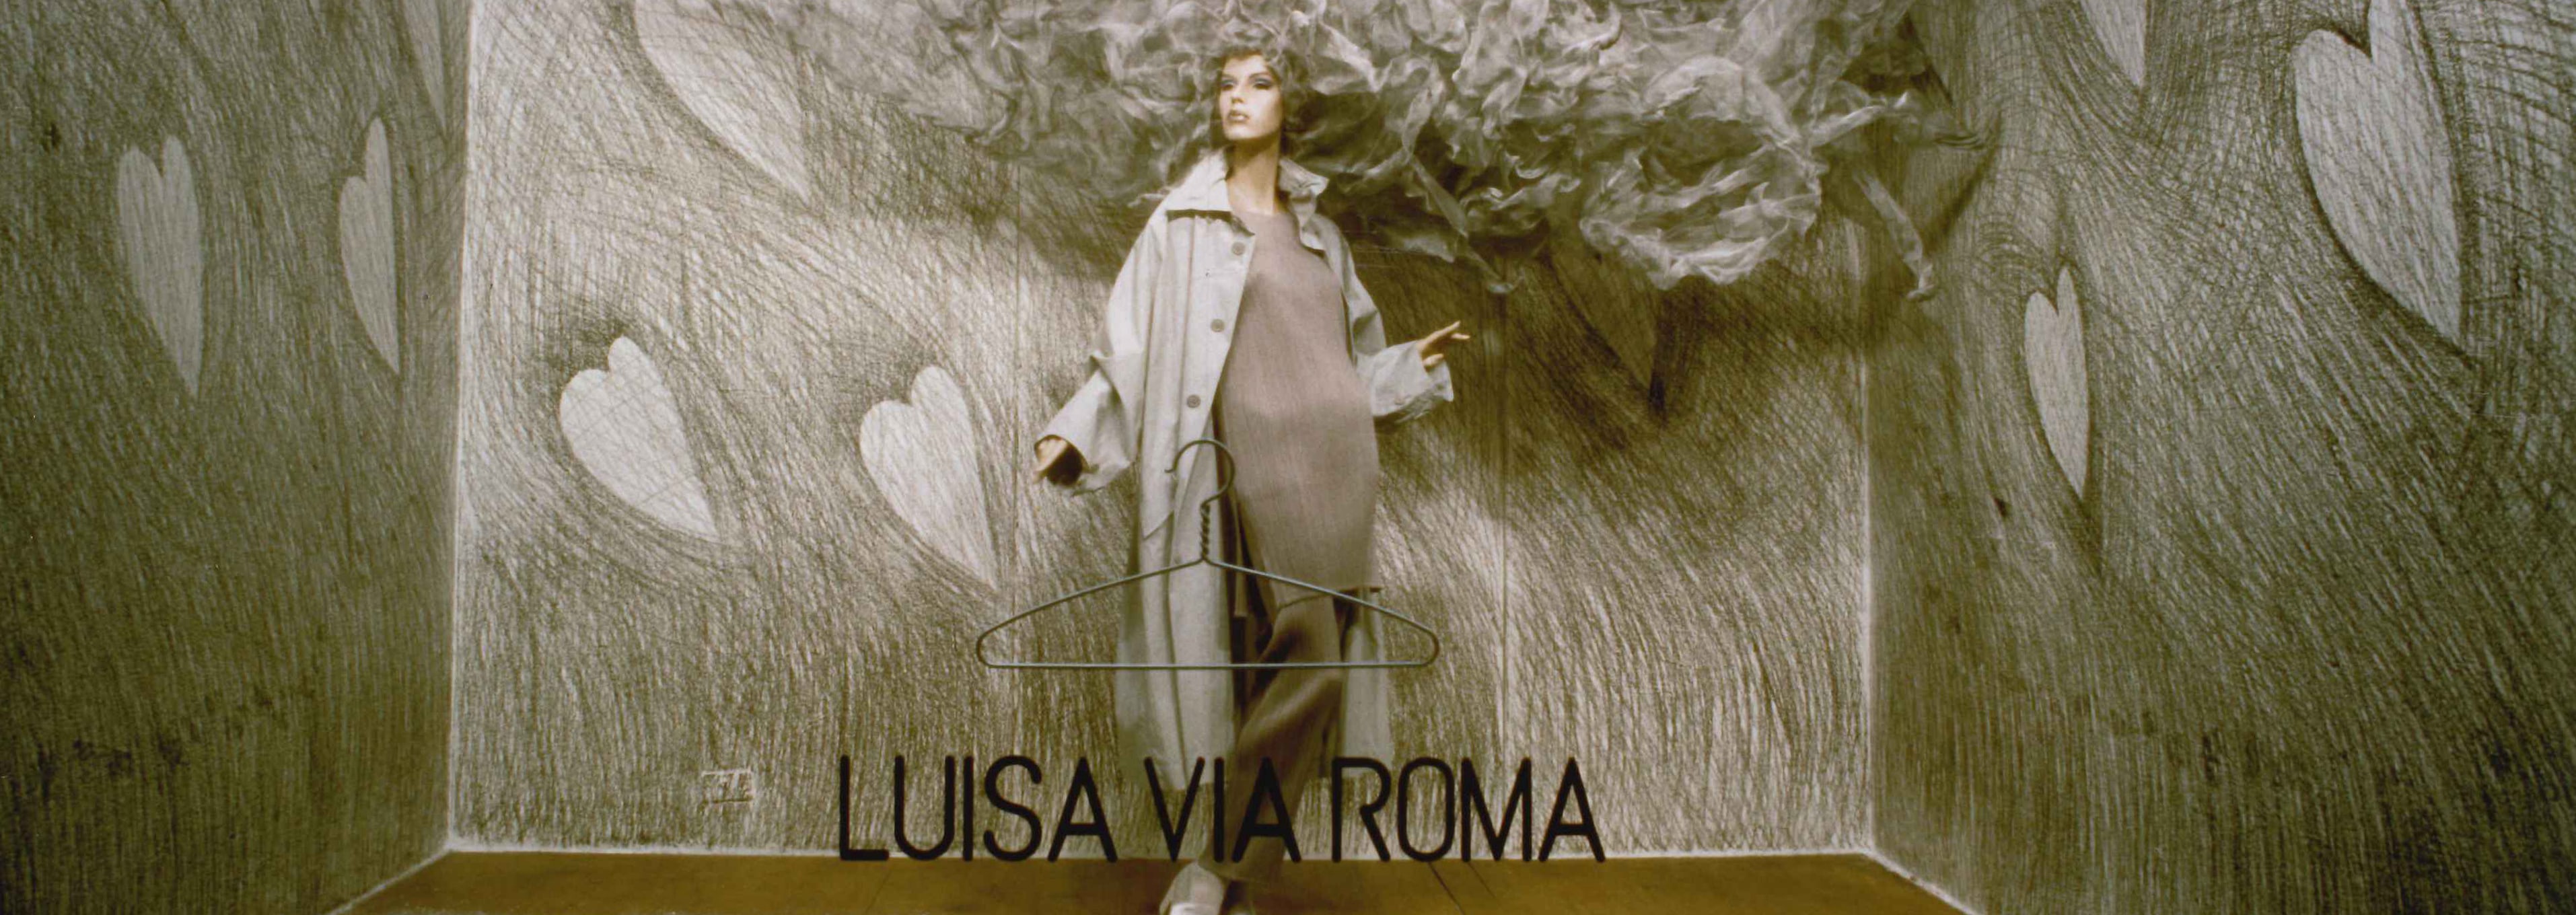 Lorenzo Gemma，LuisaViaRoma橱窗设计背后的创意头脑